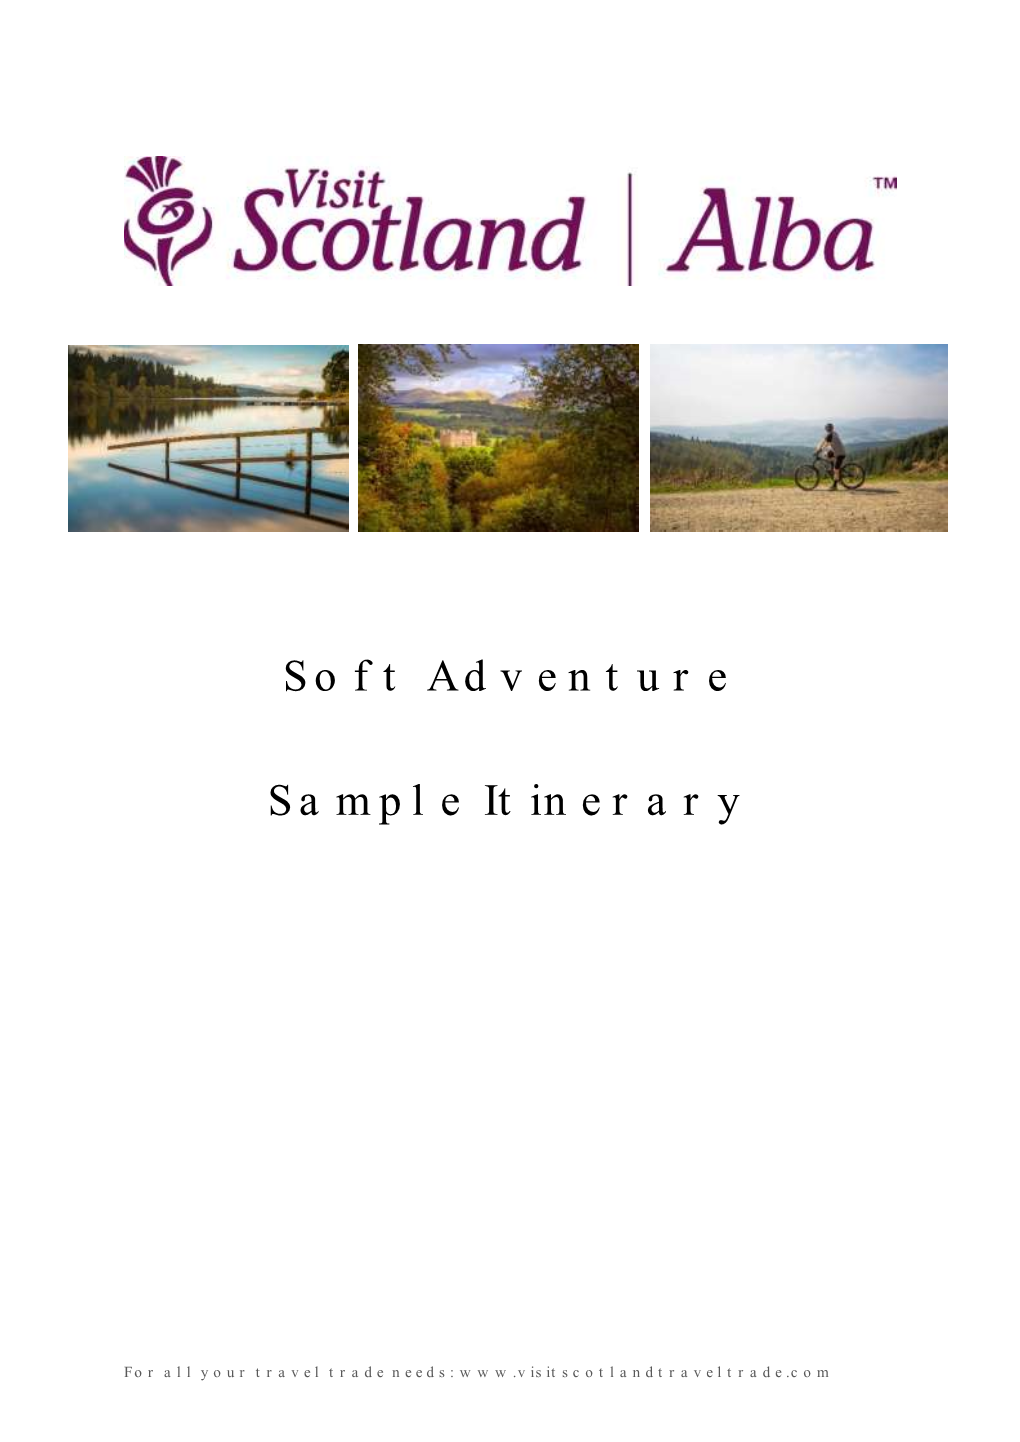 Soft Adventure Sample Itinerary